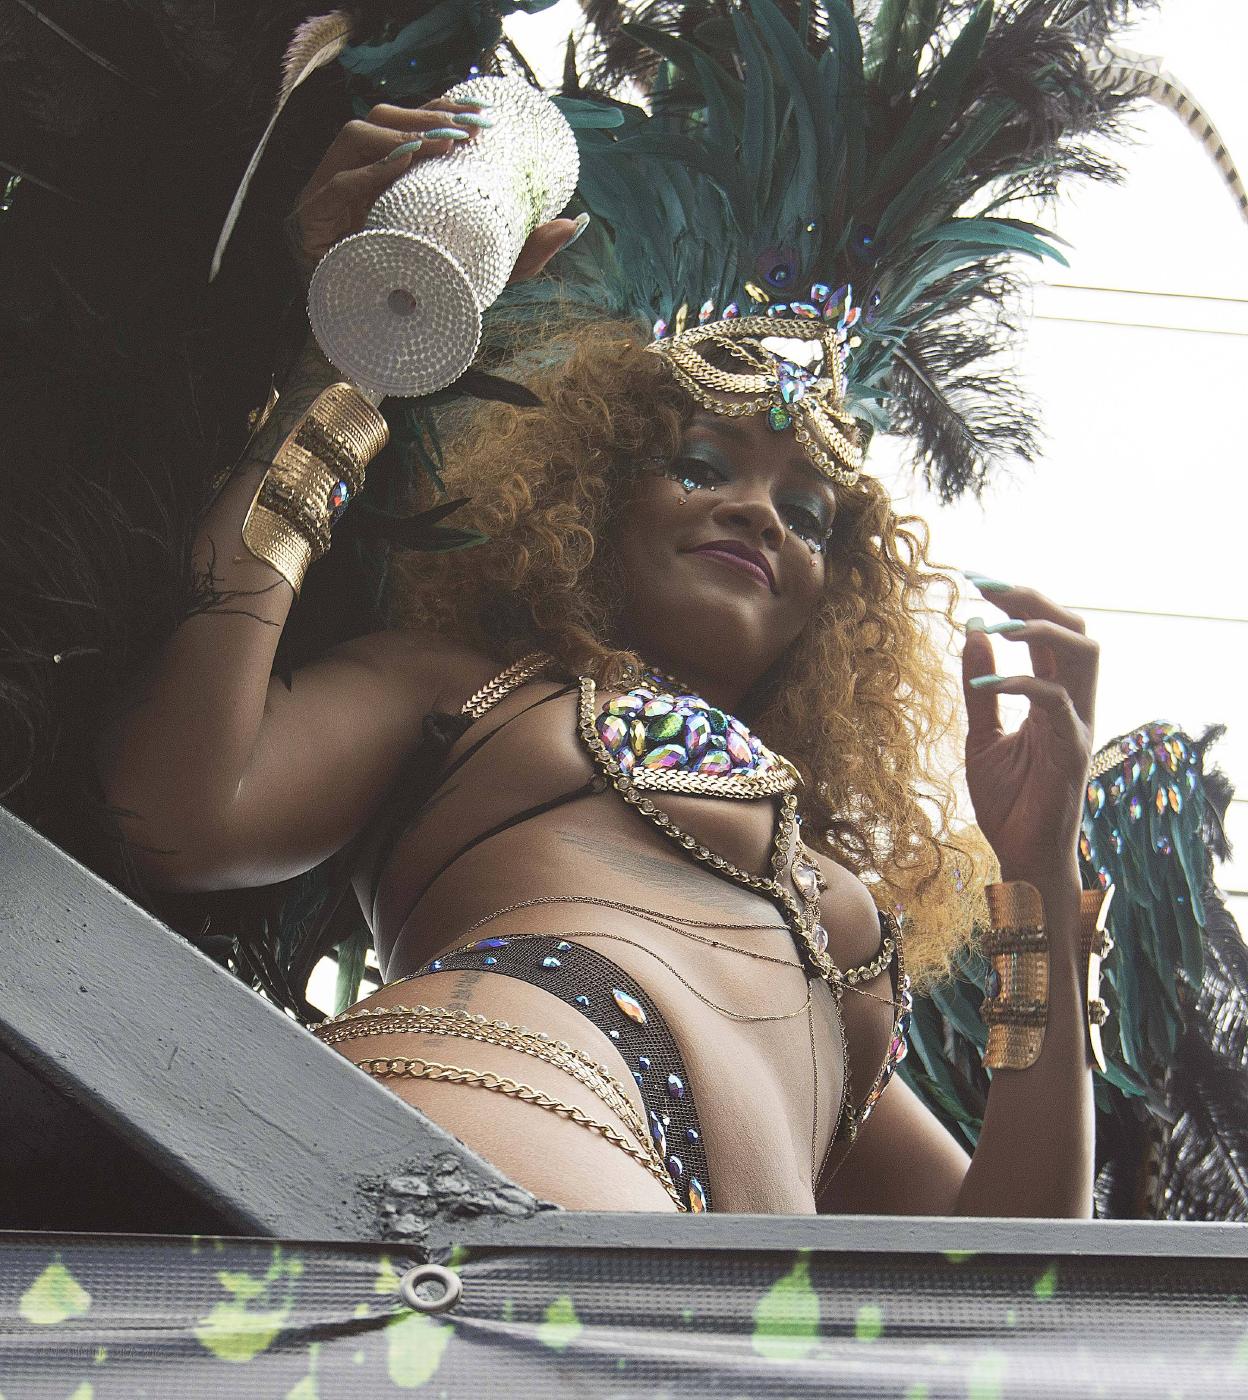 Rihanna Nip Slip Public Bikini Festival Photos Leaked 56